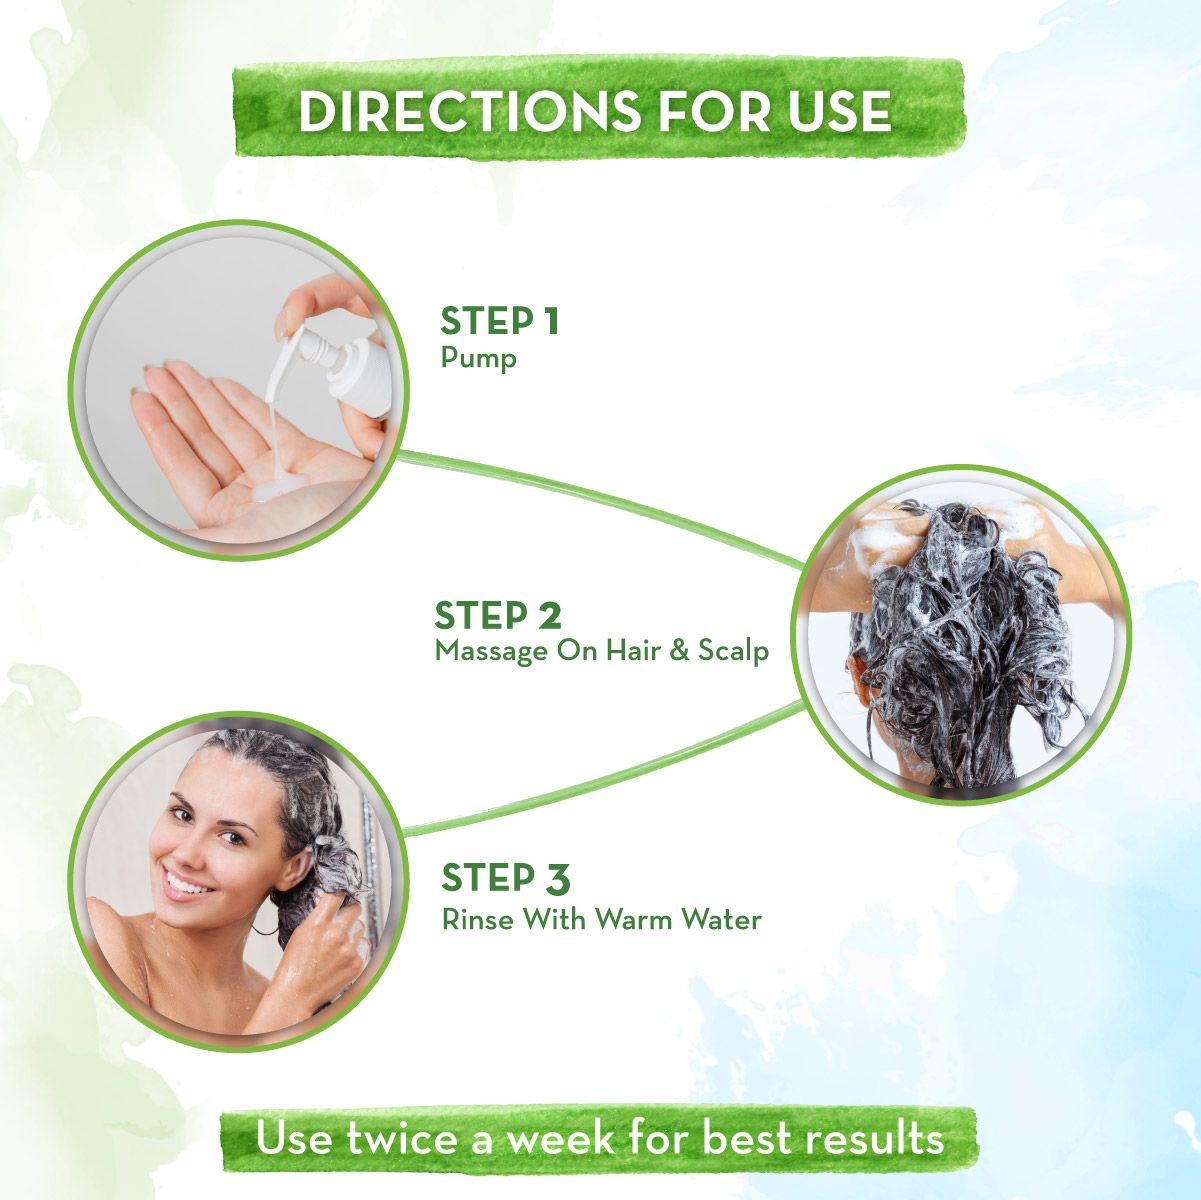 Onion Shampoo for Hair Fall Control- 250ml | Mamaearth